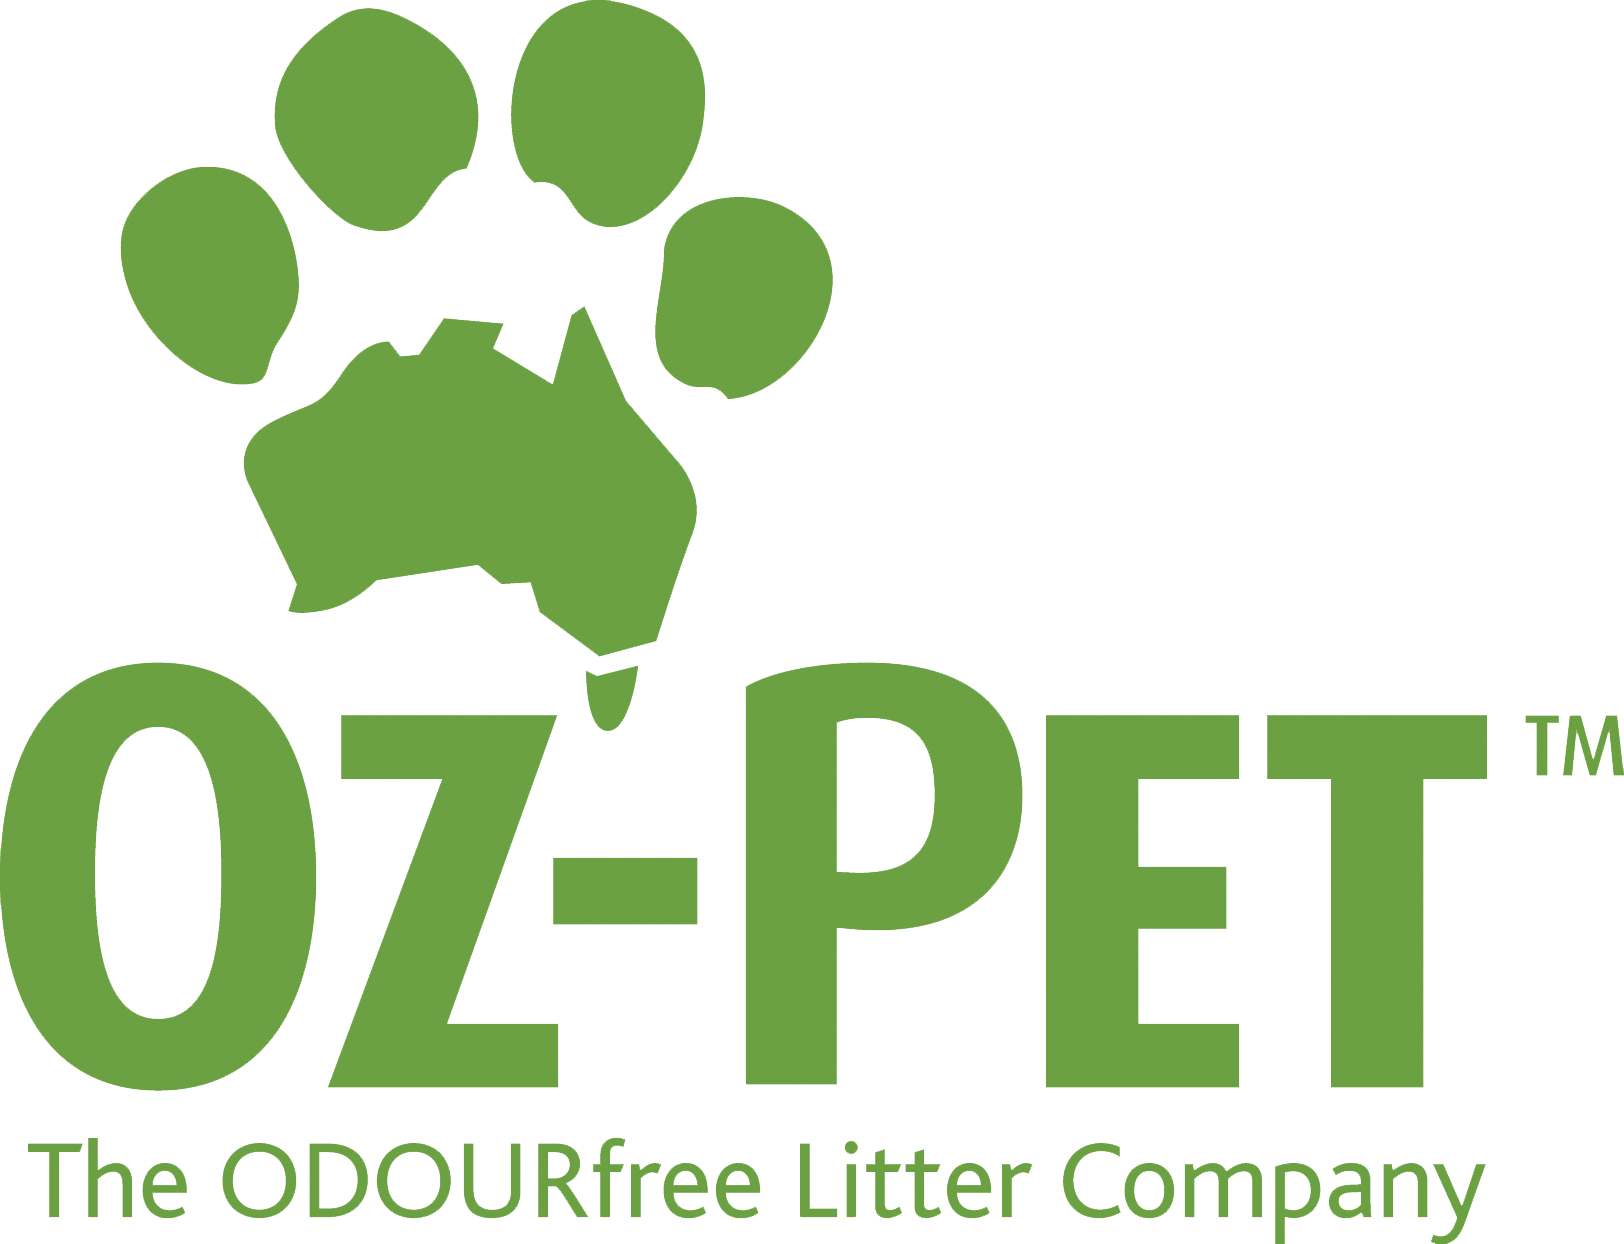 Oz-Pet